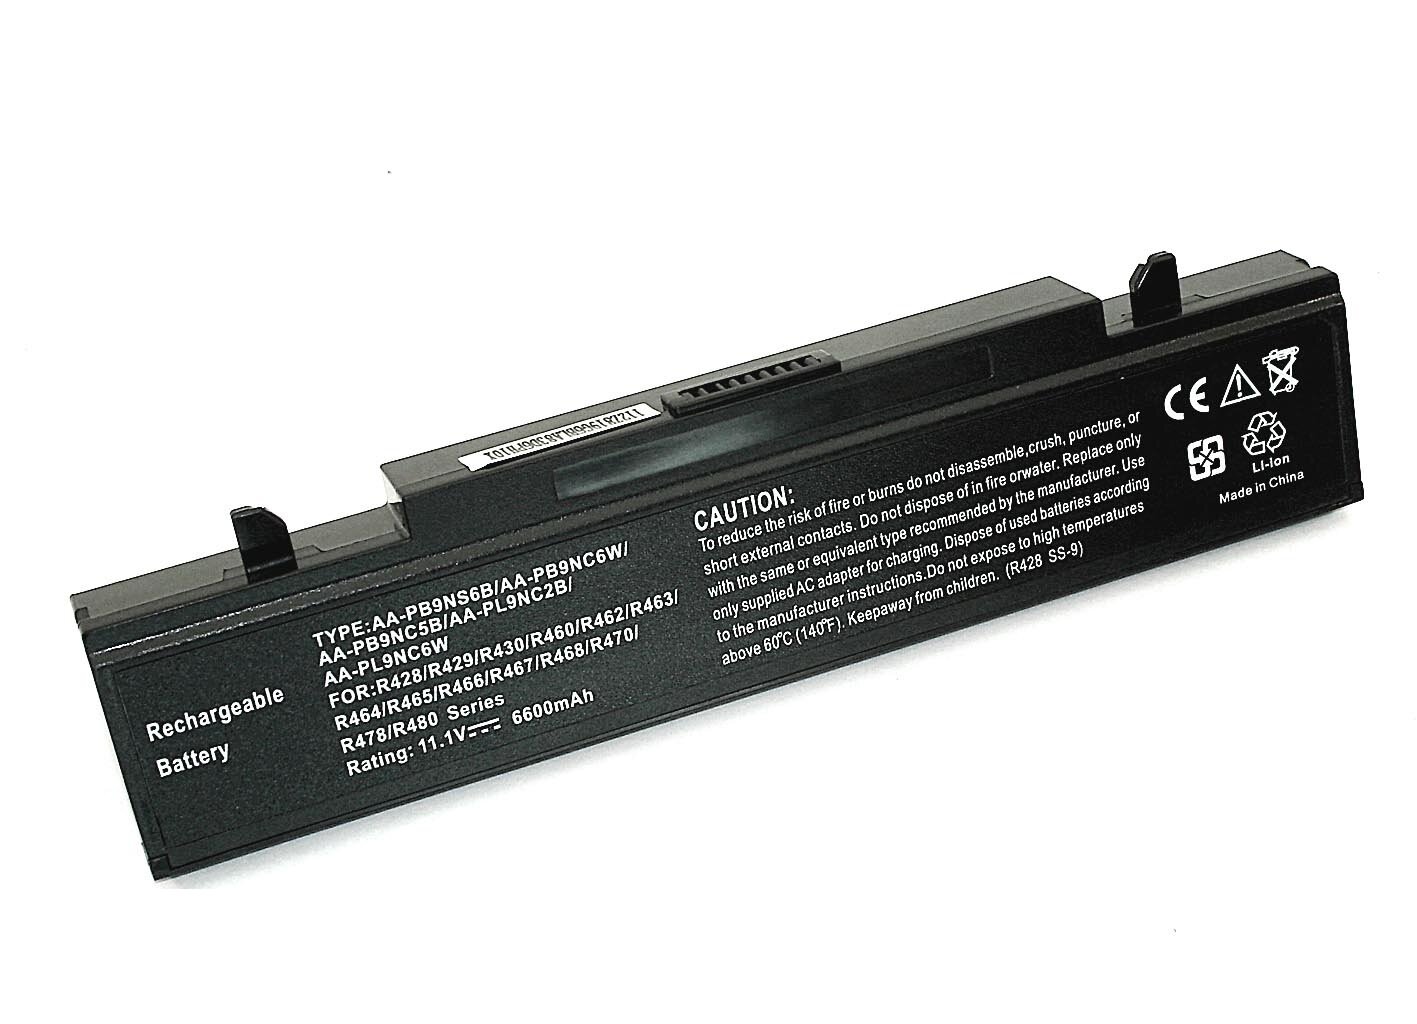 Аккумулятор для ноутбука усиленный Samsung R425, R430, R458, R467, R468, R470, R478, R480, R505, R507 Series. 11.1V 6600mAh PN: AA-PB9NS6W, PB9NC5B